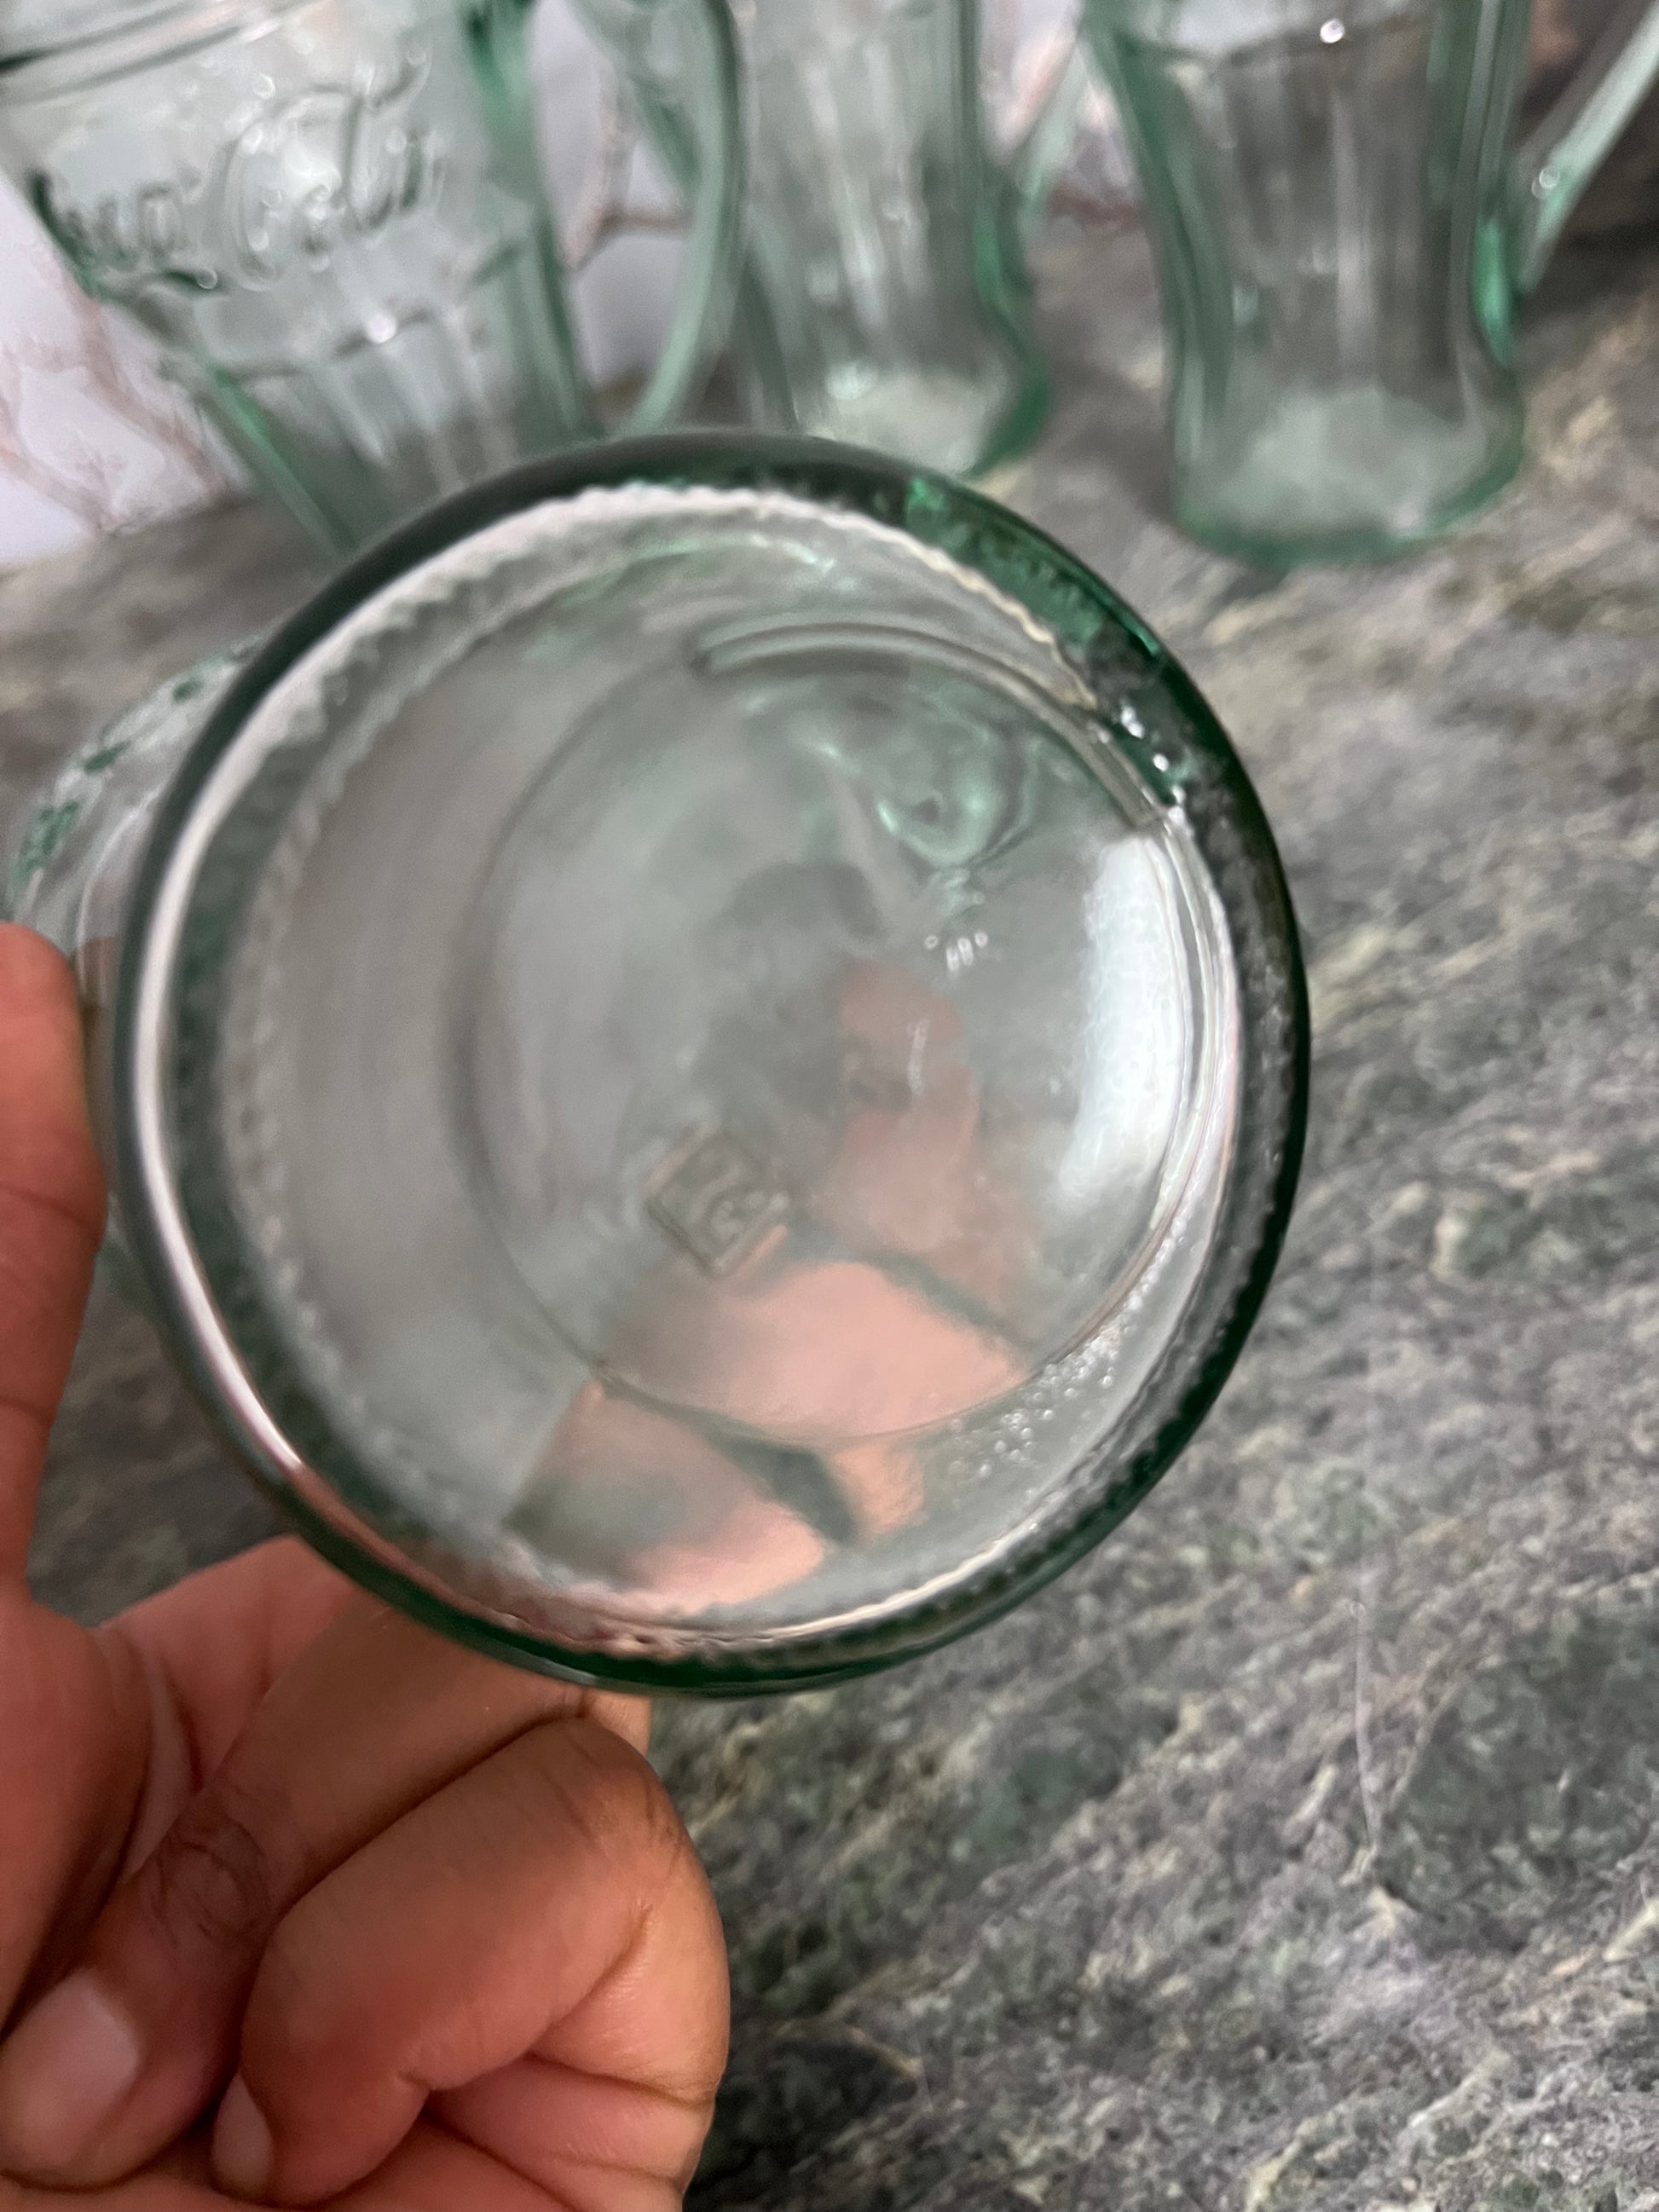 Set of 8 Coca Cola Green Bubble Glass Drinking Glasses 16 oz